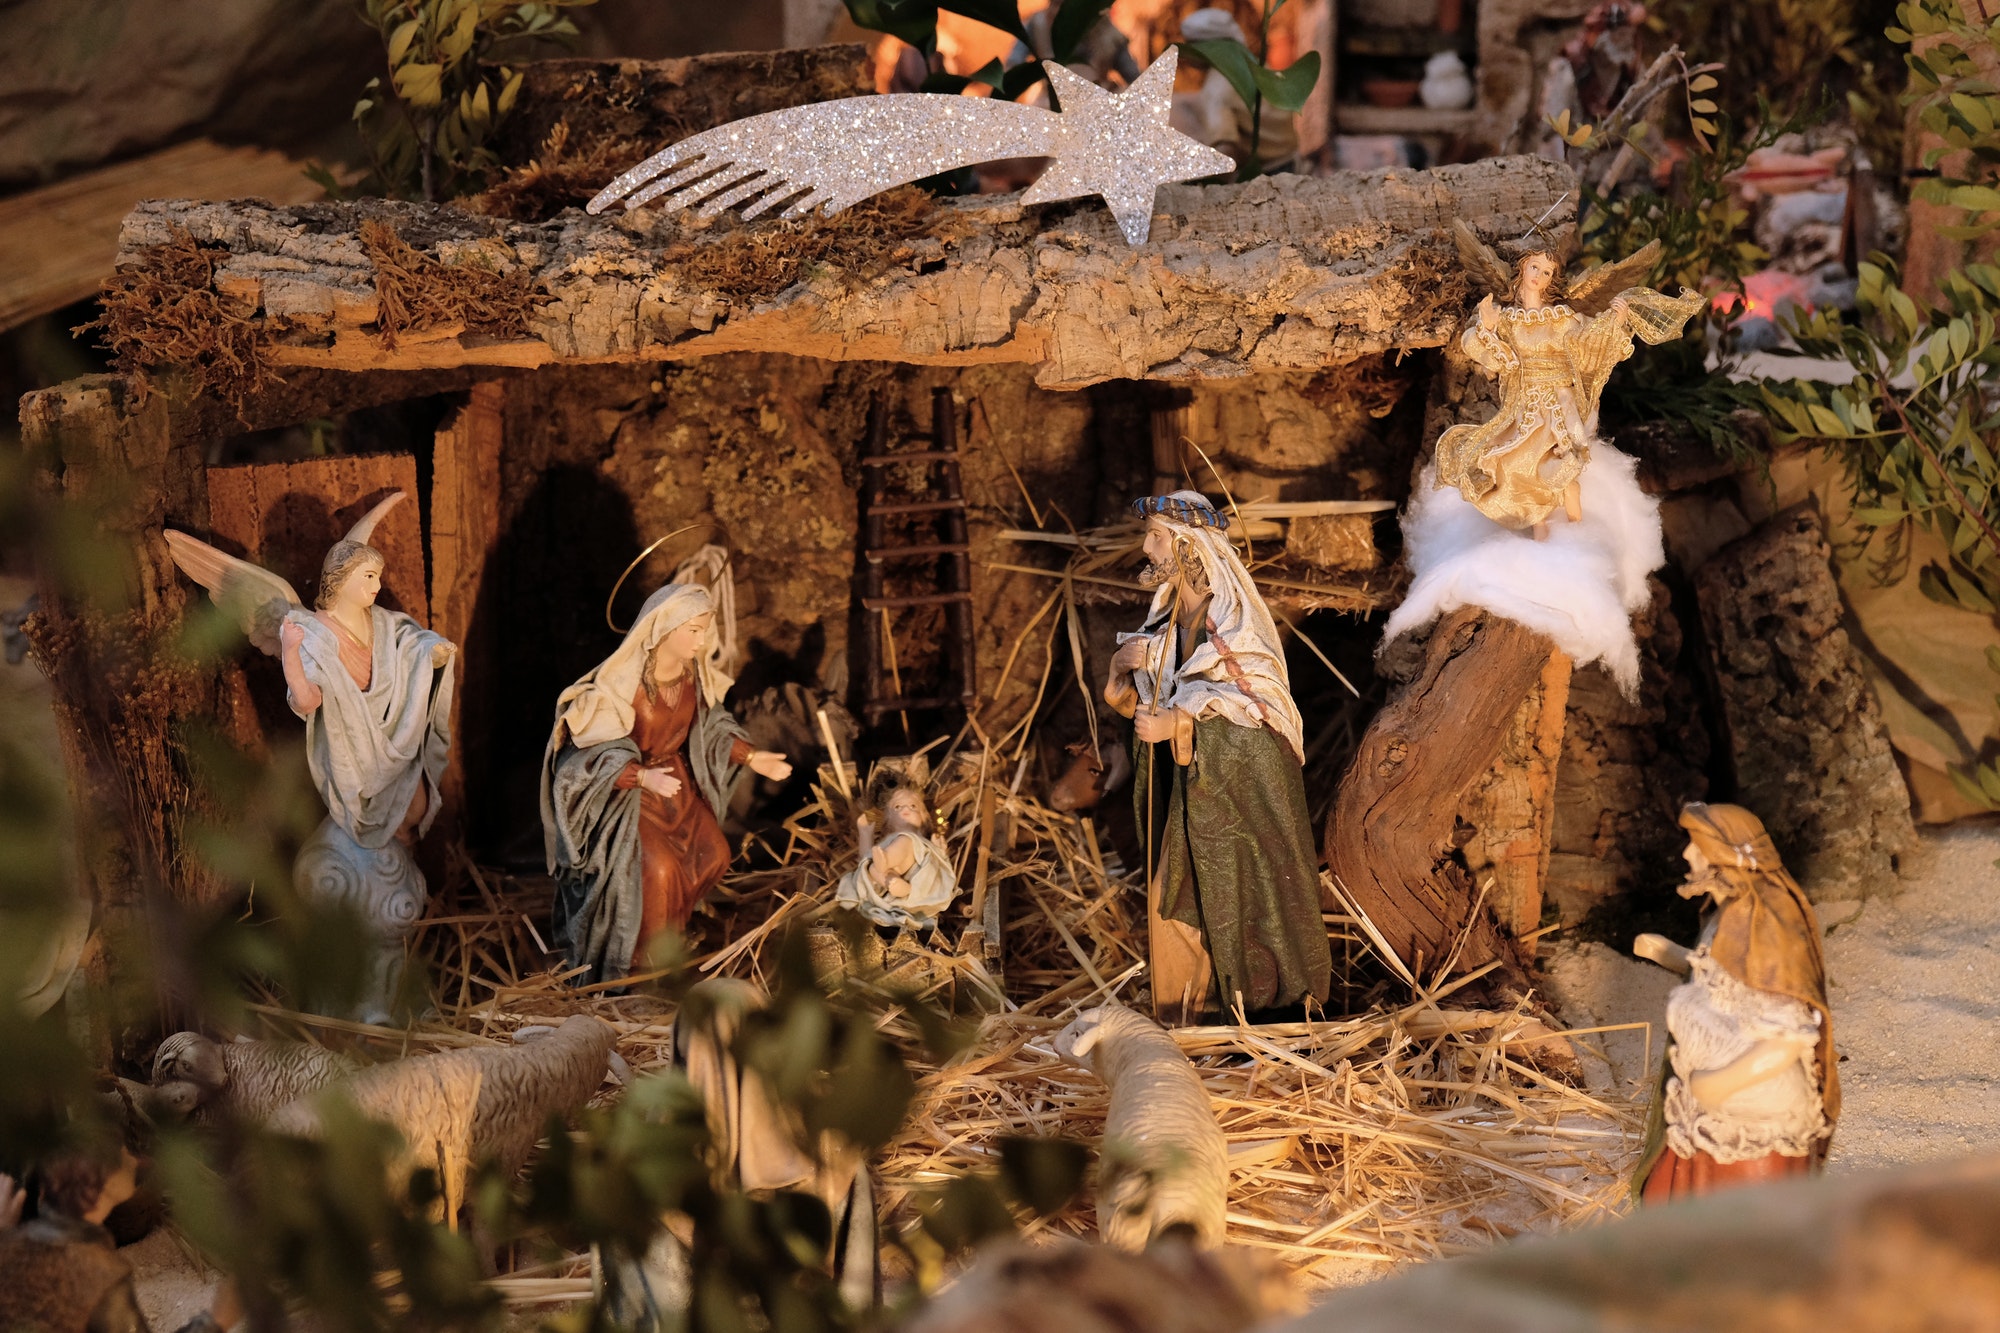 Nativity scene with baby Jesus. The Magi in the nativity scene. Christmas decor in the church.